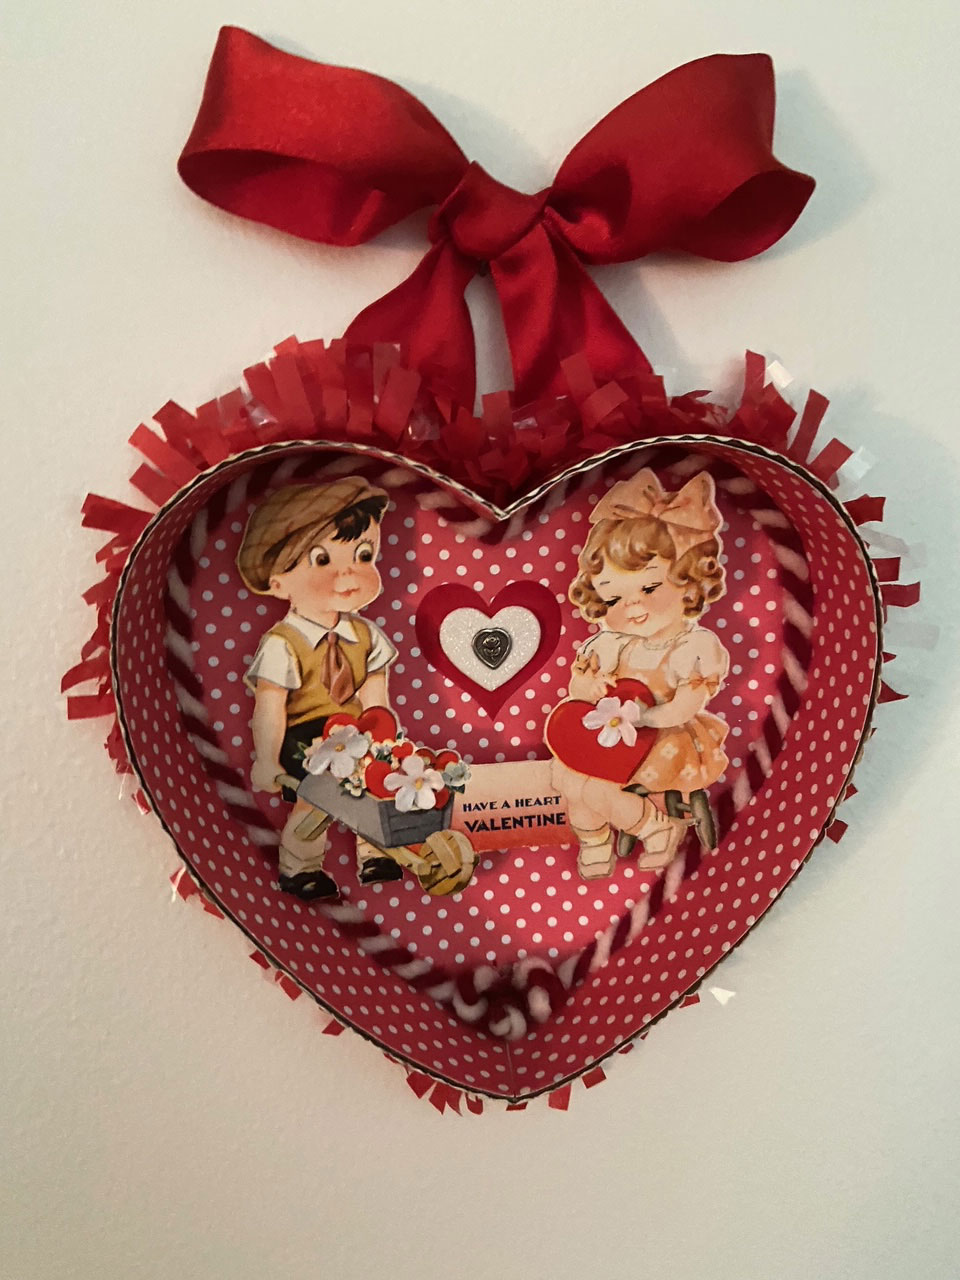 A Candy Box Valentine